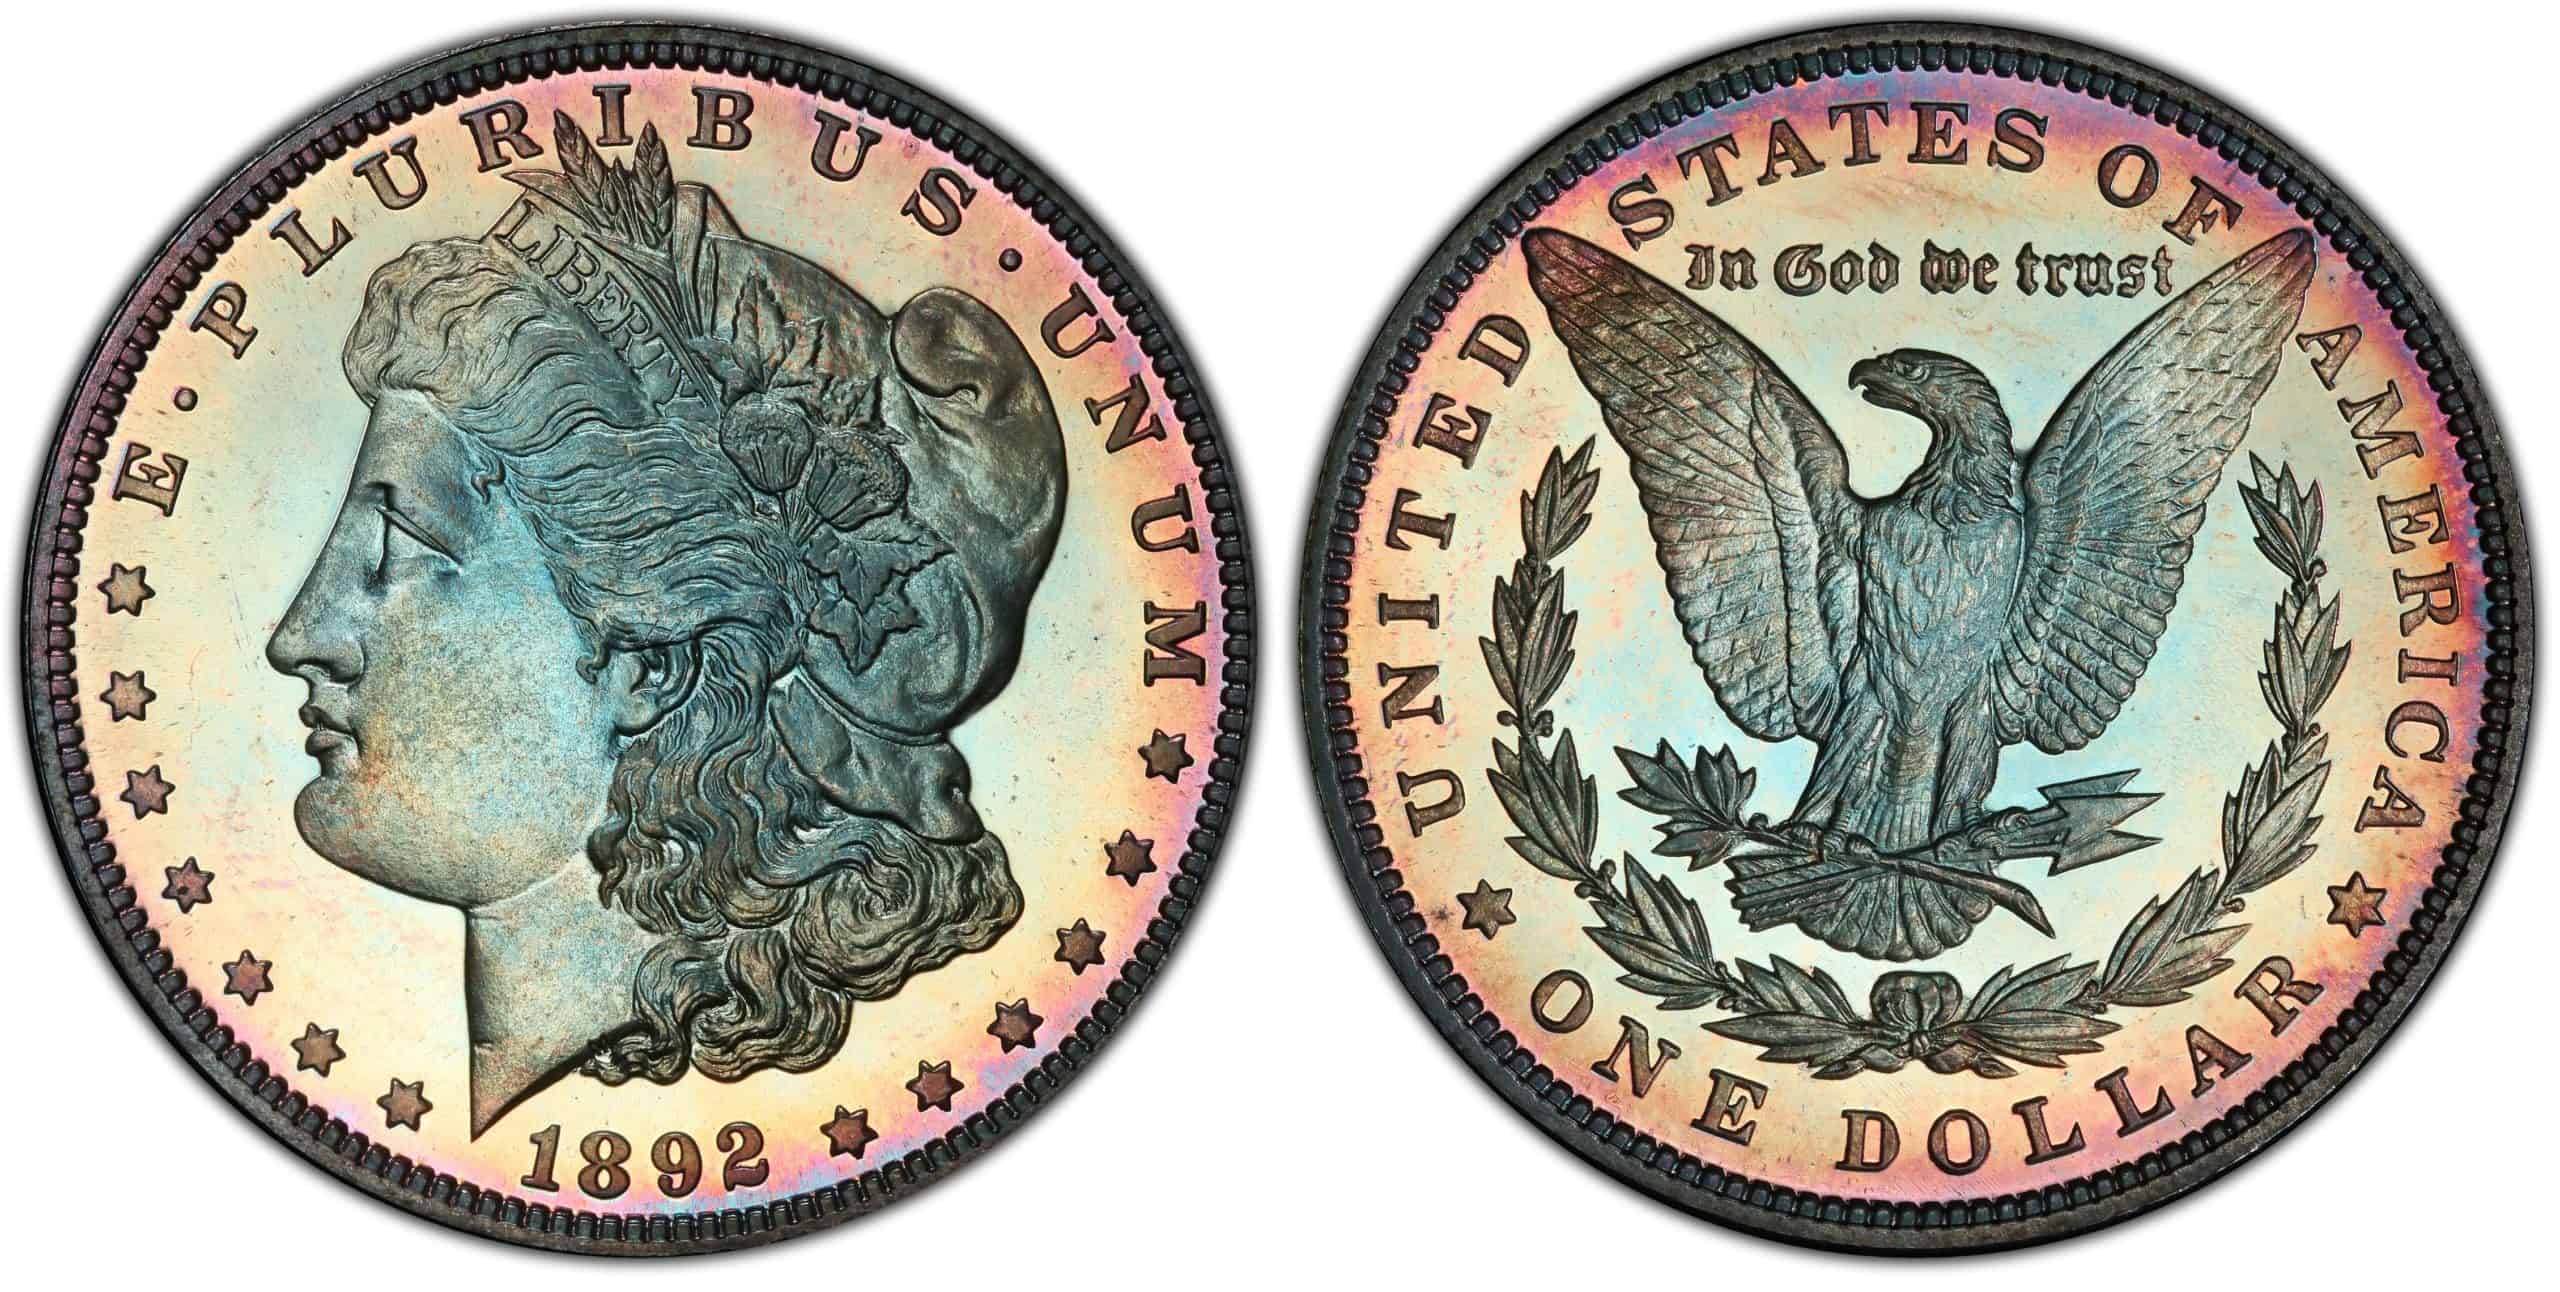 1892 proof Morgan silver dollar